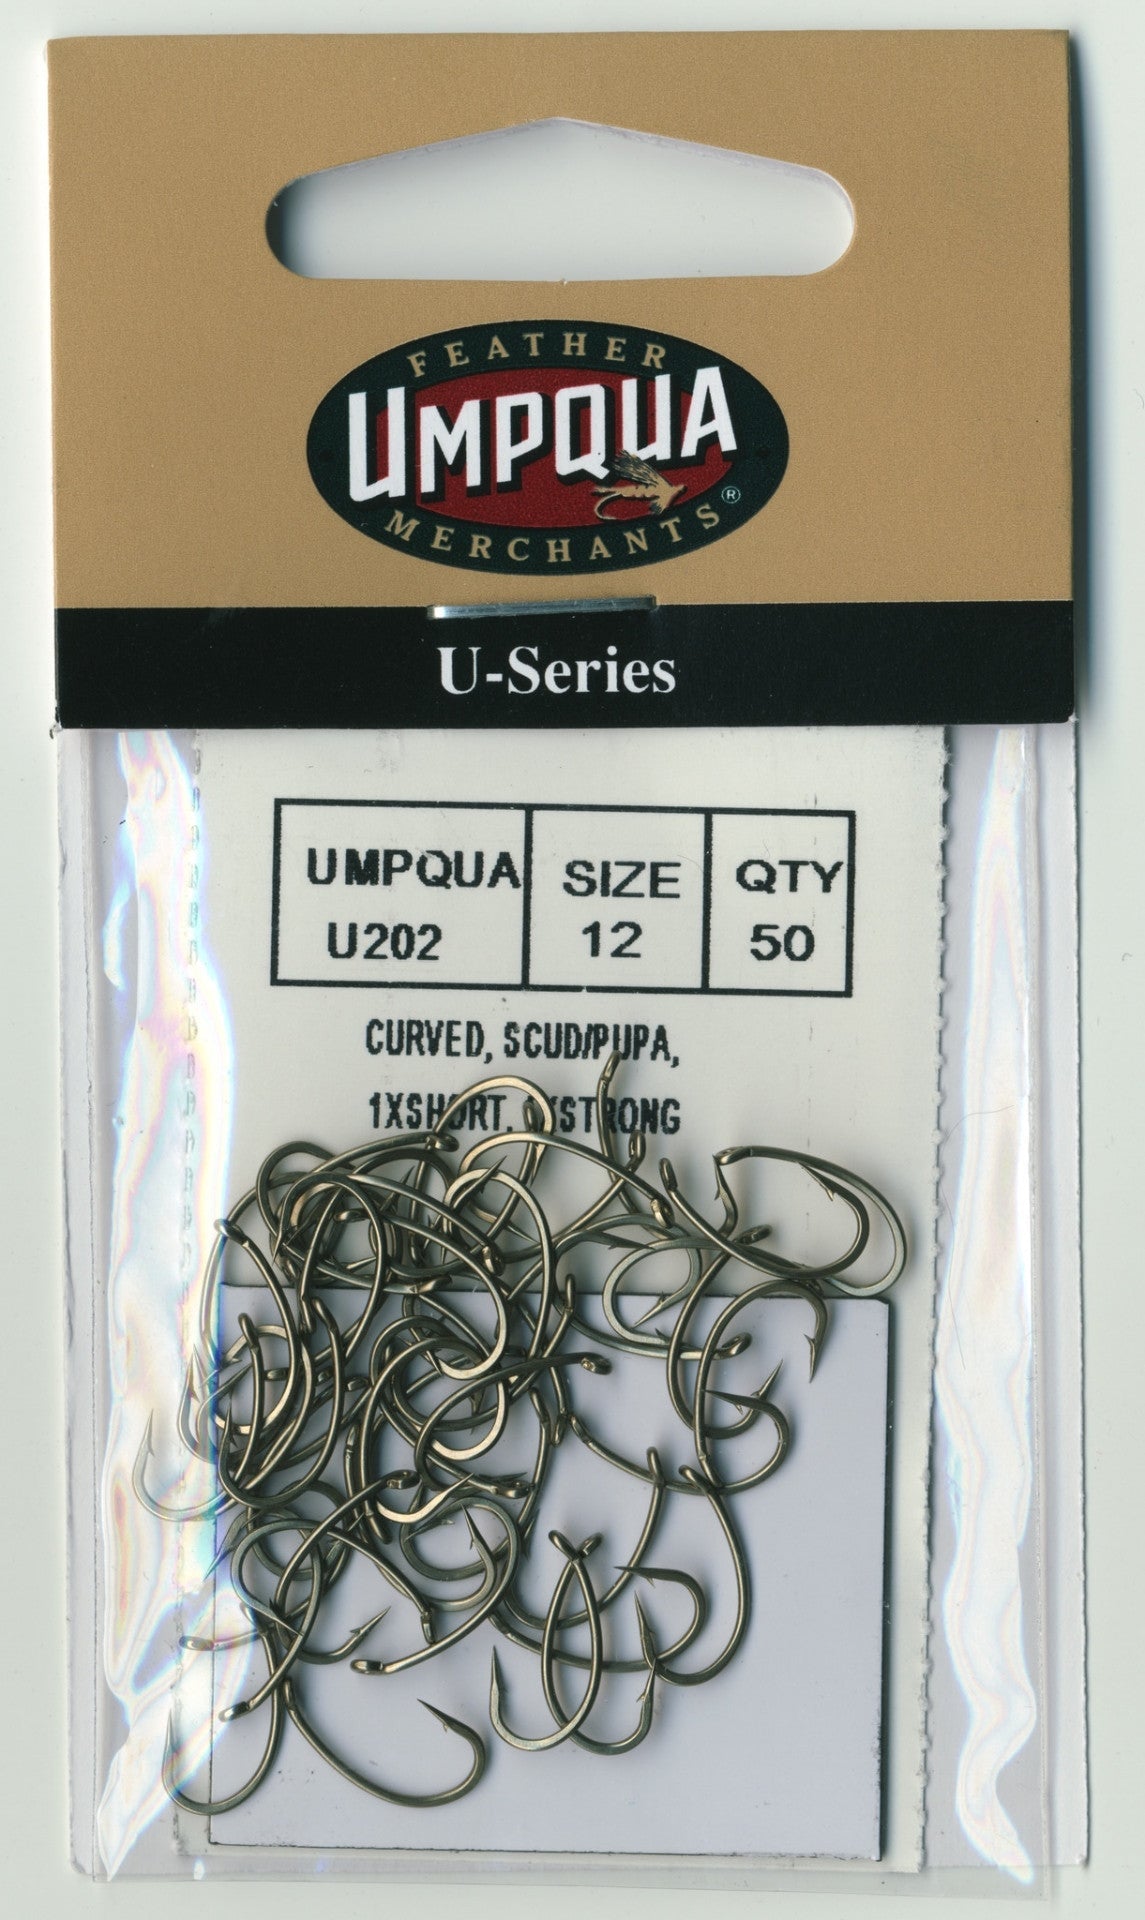 Umpqua U-Series U202 Fly Tying Hooks - 18